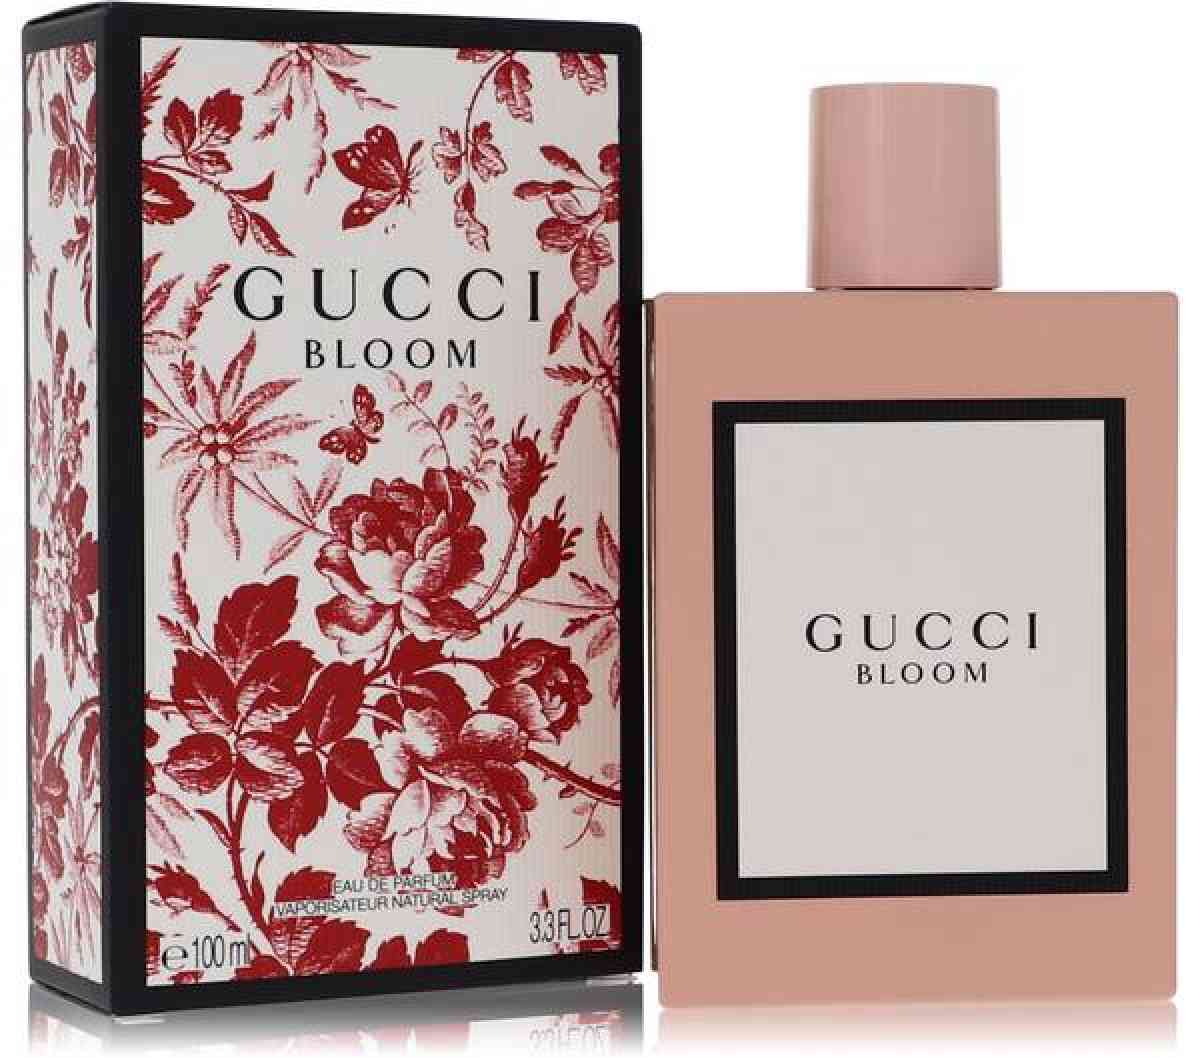 New (Sealed) Gucci Bloom Eau De Parfum Spray 3.3 oz